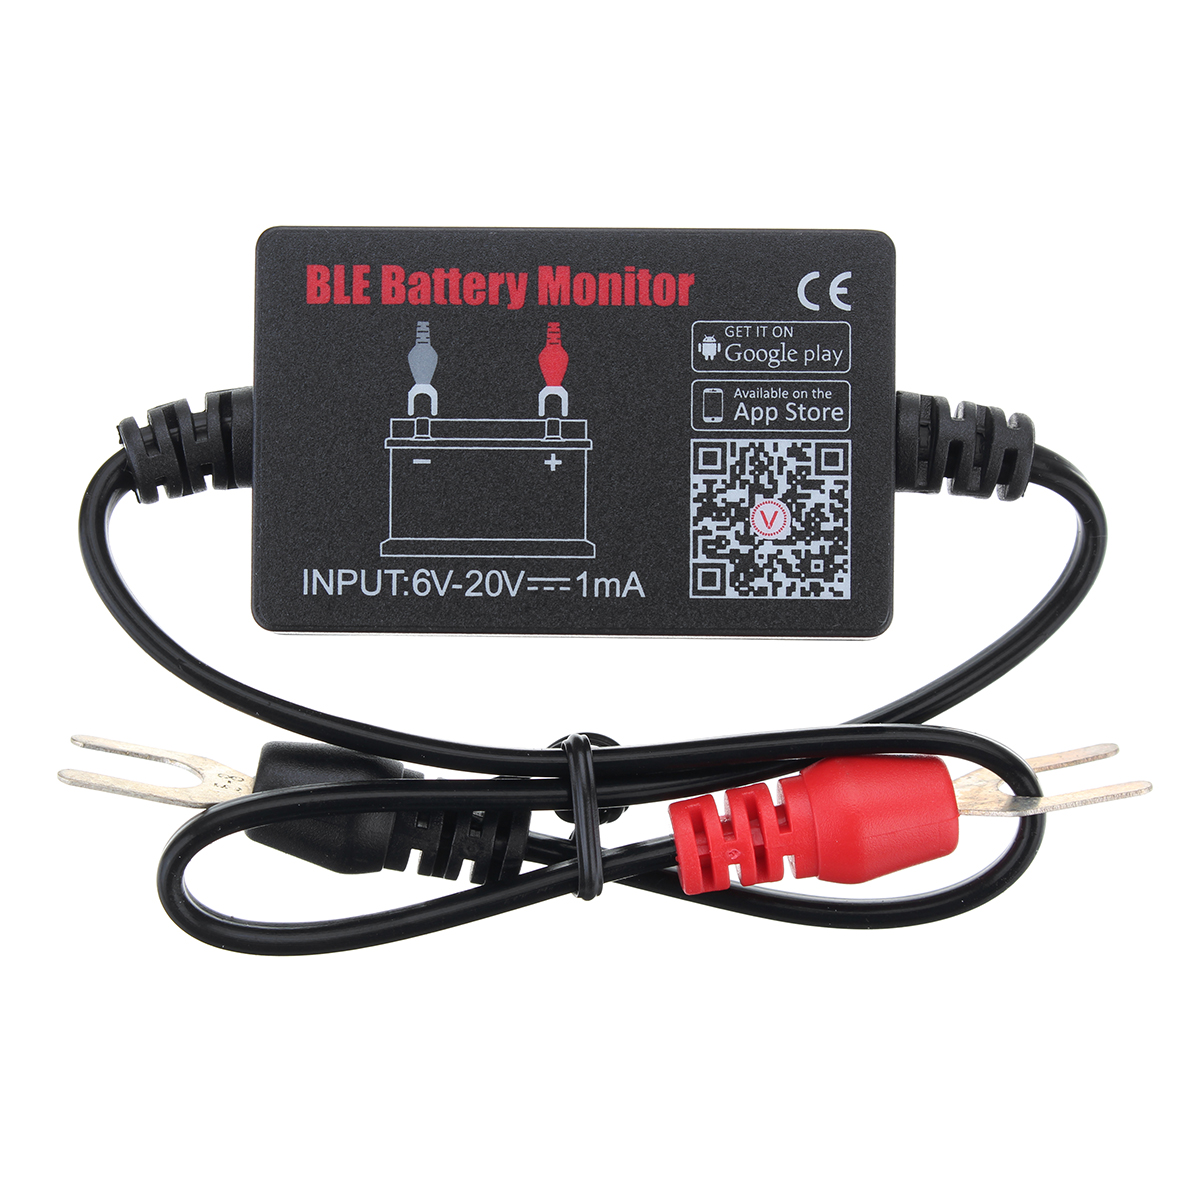 12V Car Battery Monitor Tester BM2​​ Bluetooth 4.0 Device for 6V-20V Vehicle